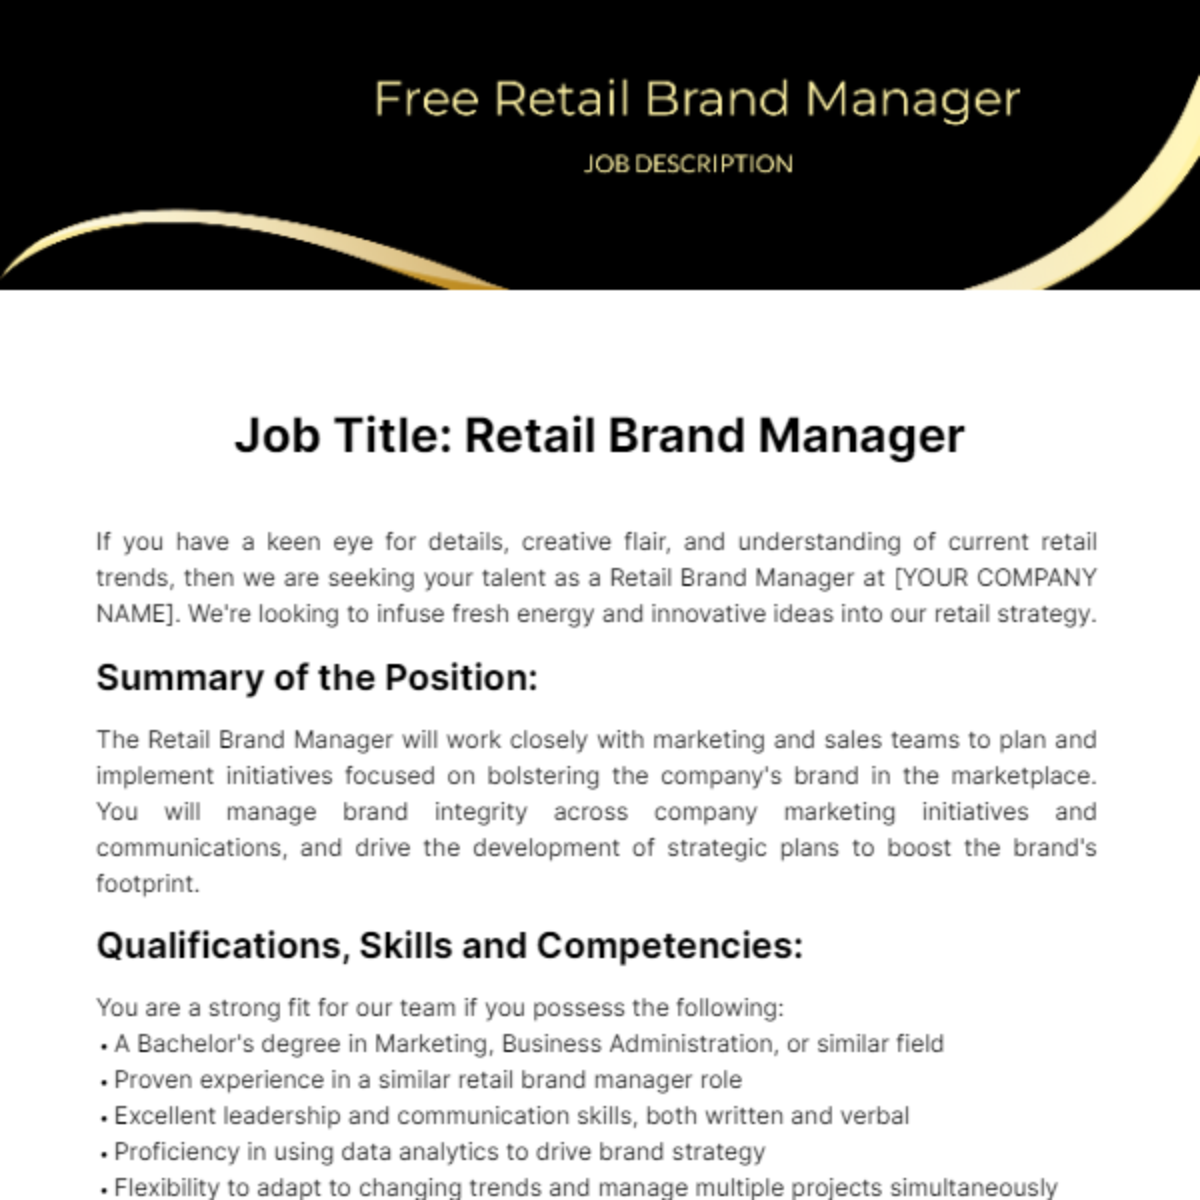 Free Retail Brand Manager Job Description Template